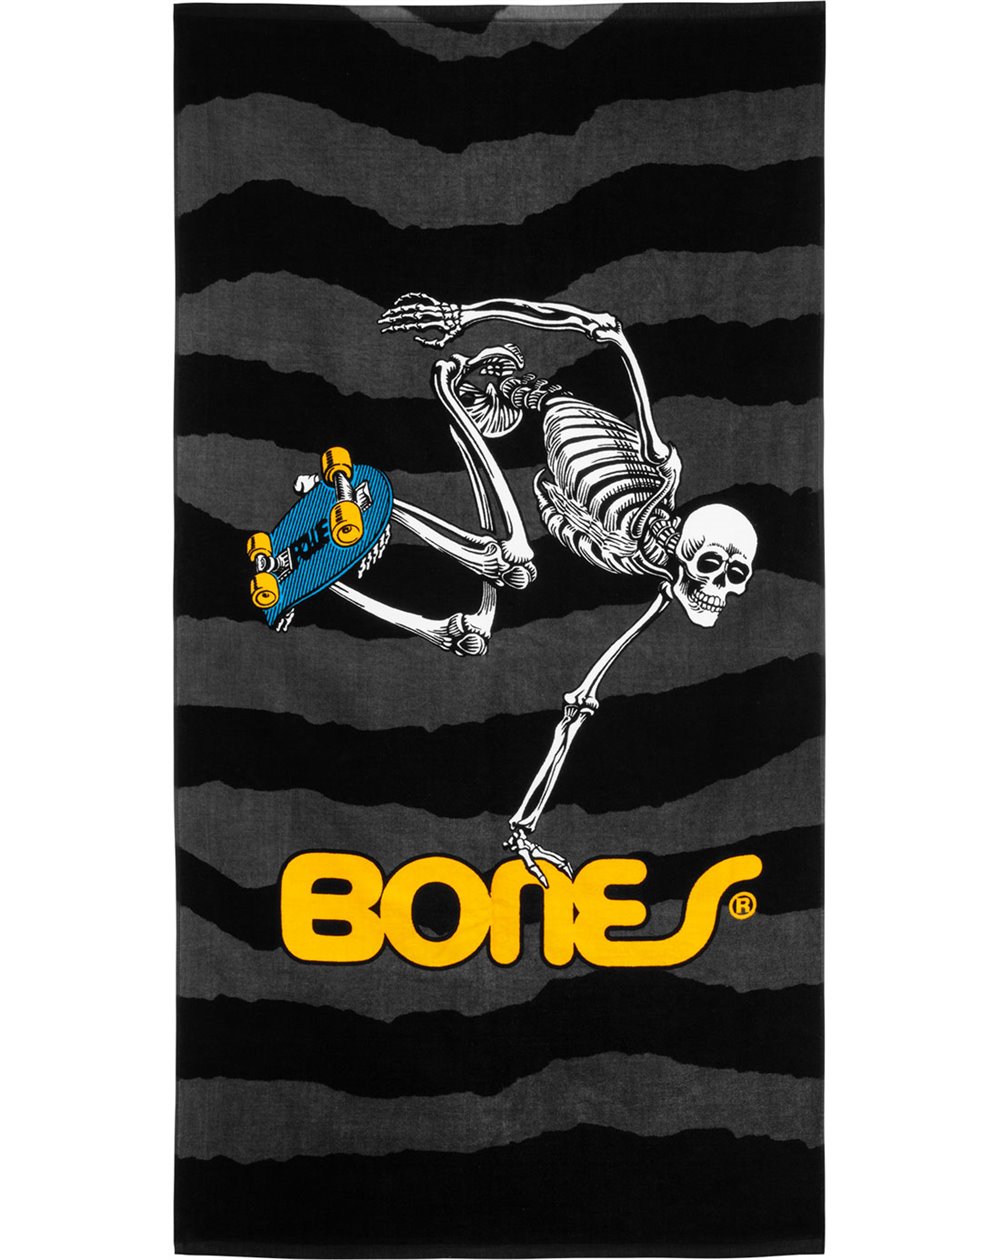 Powell Peralta Sk8board Skeleton Toalla de Playa